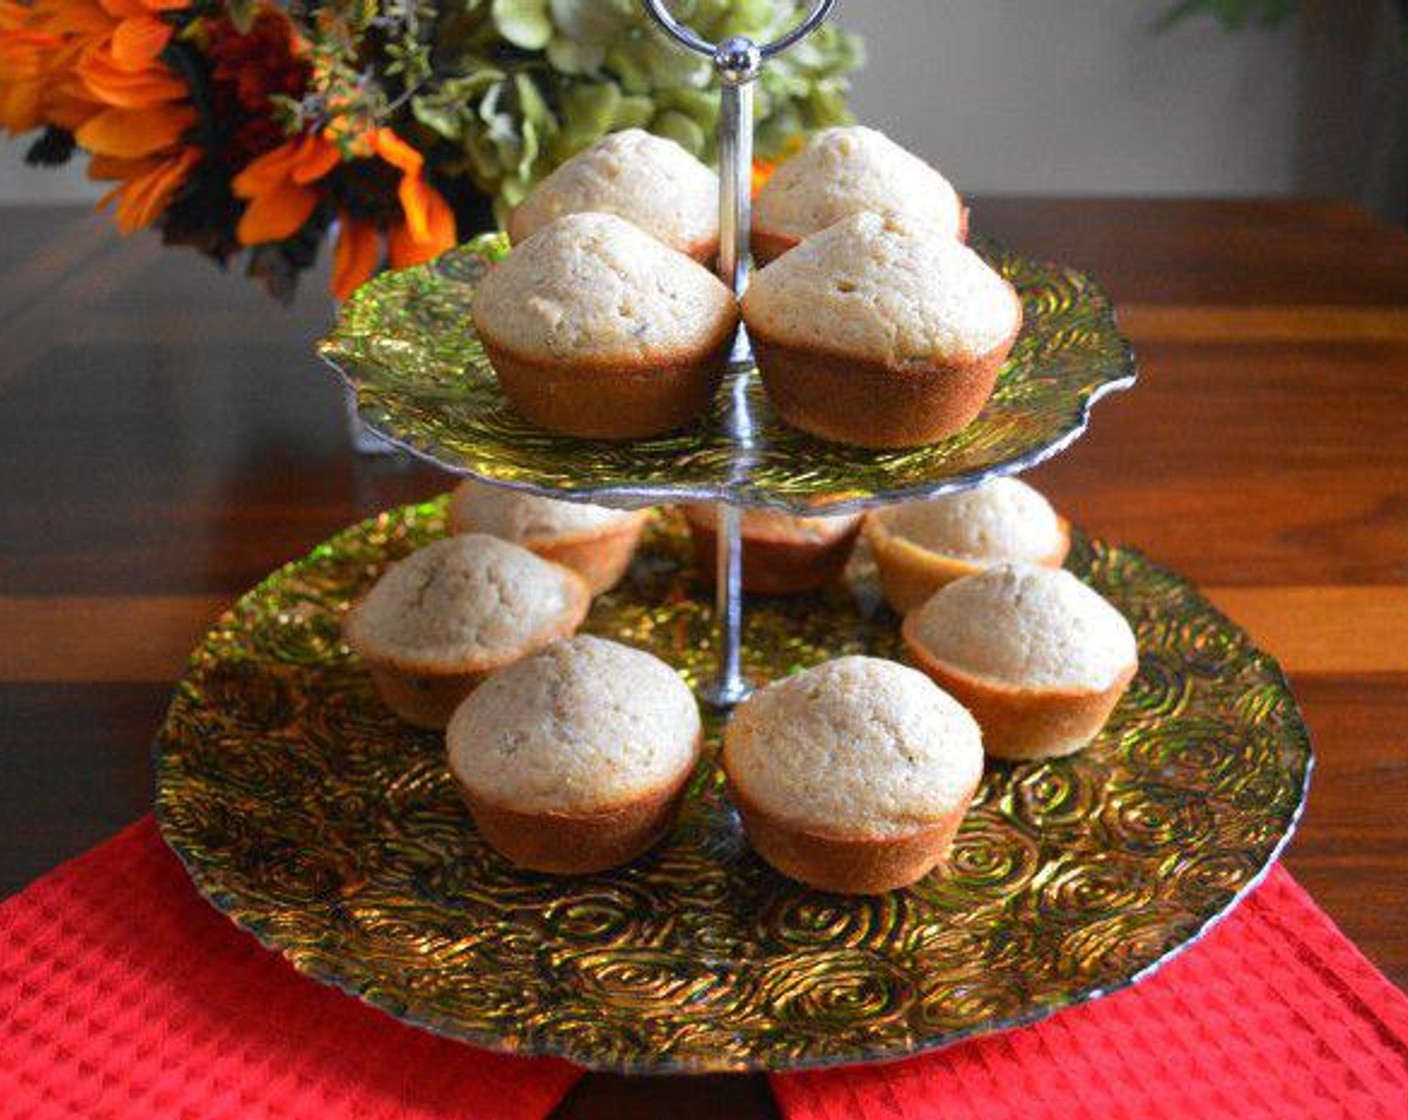 Rose Cardamom Muffins